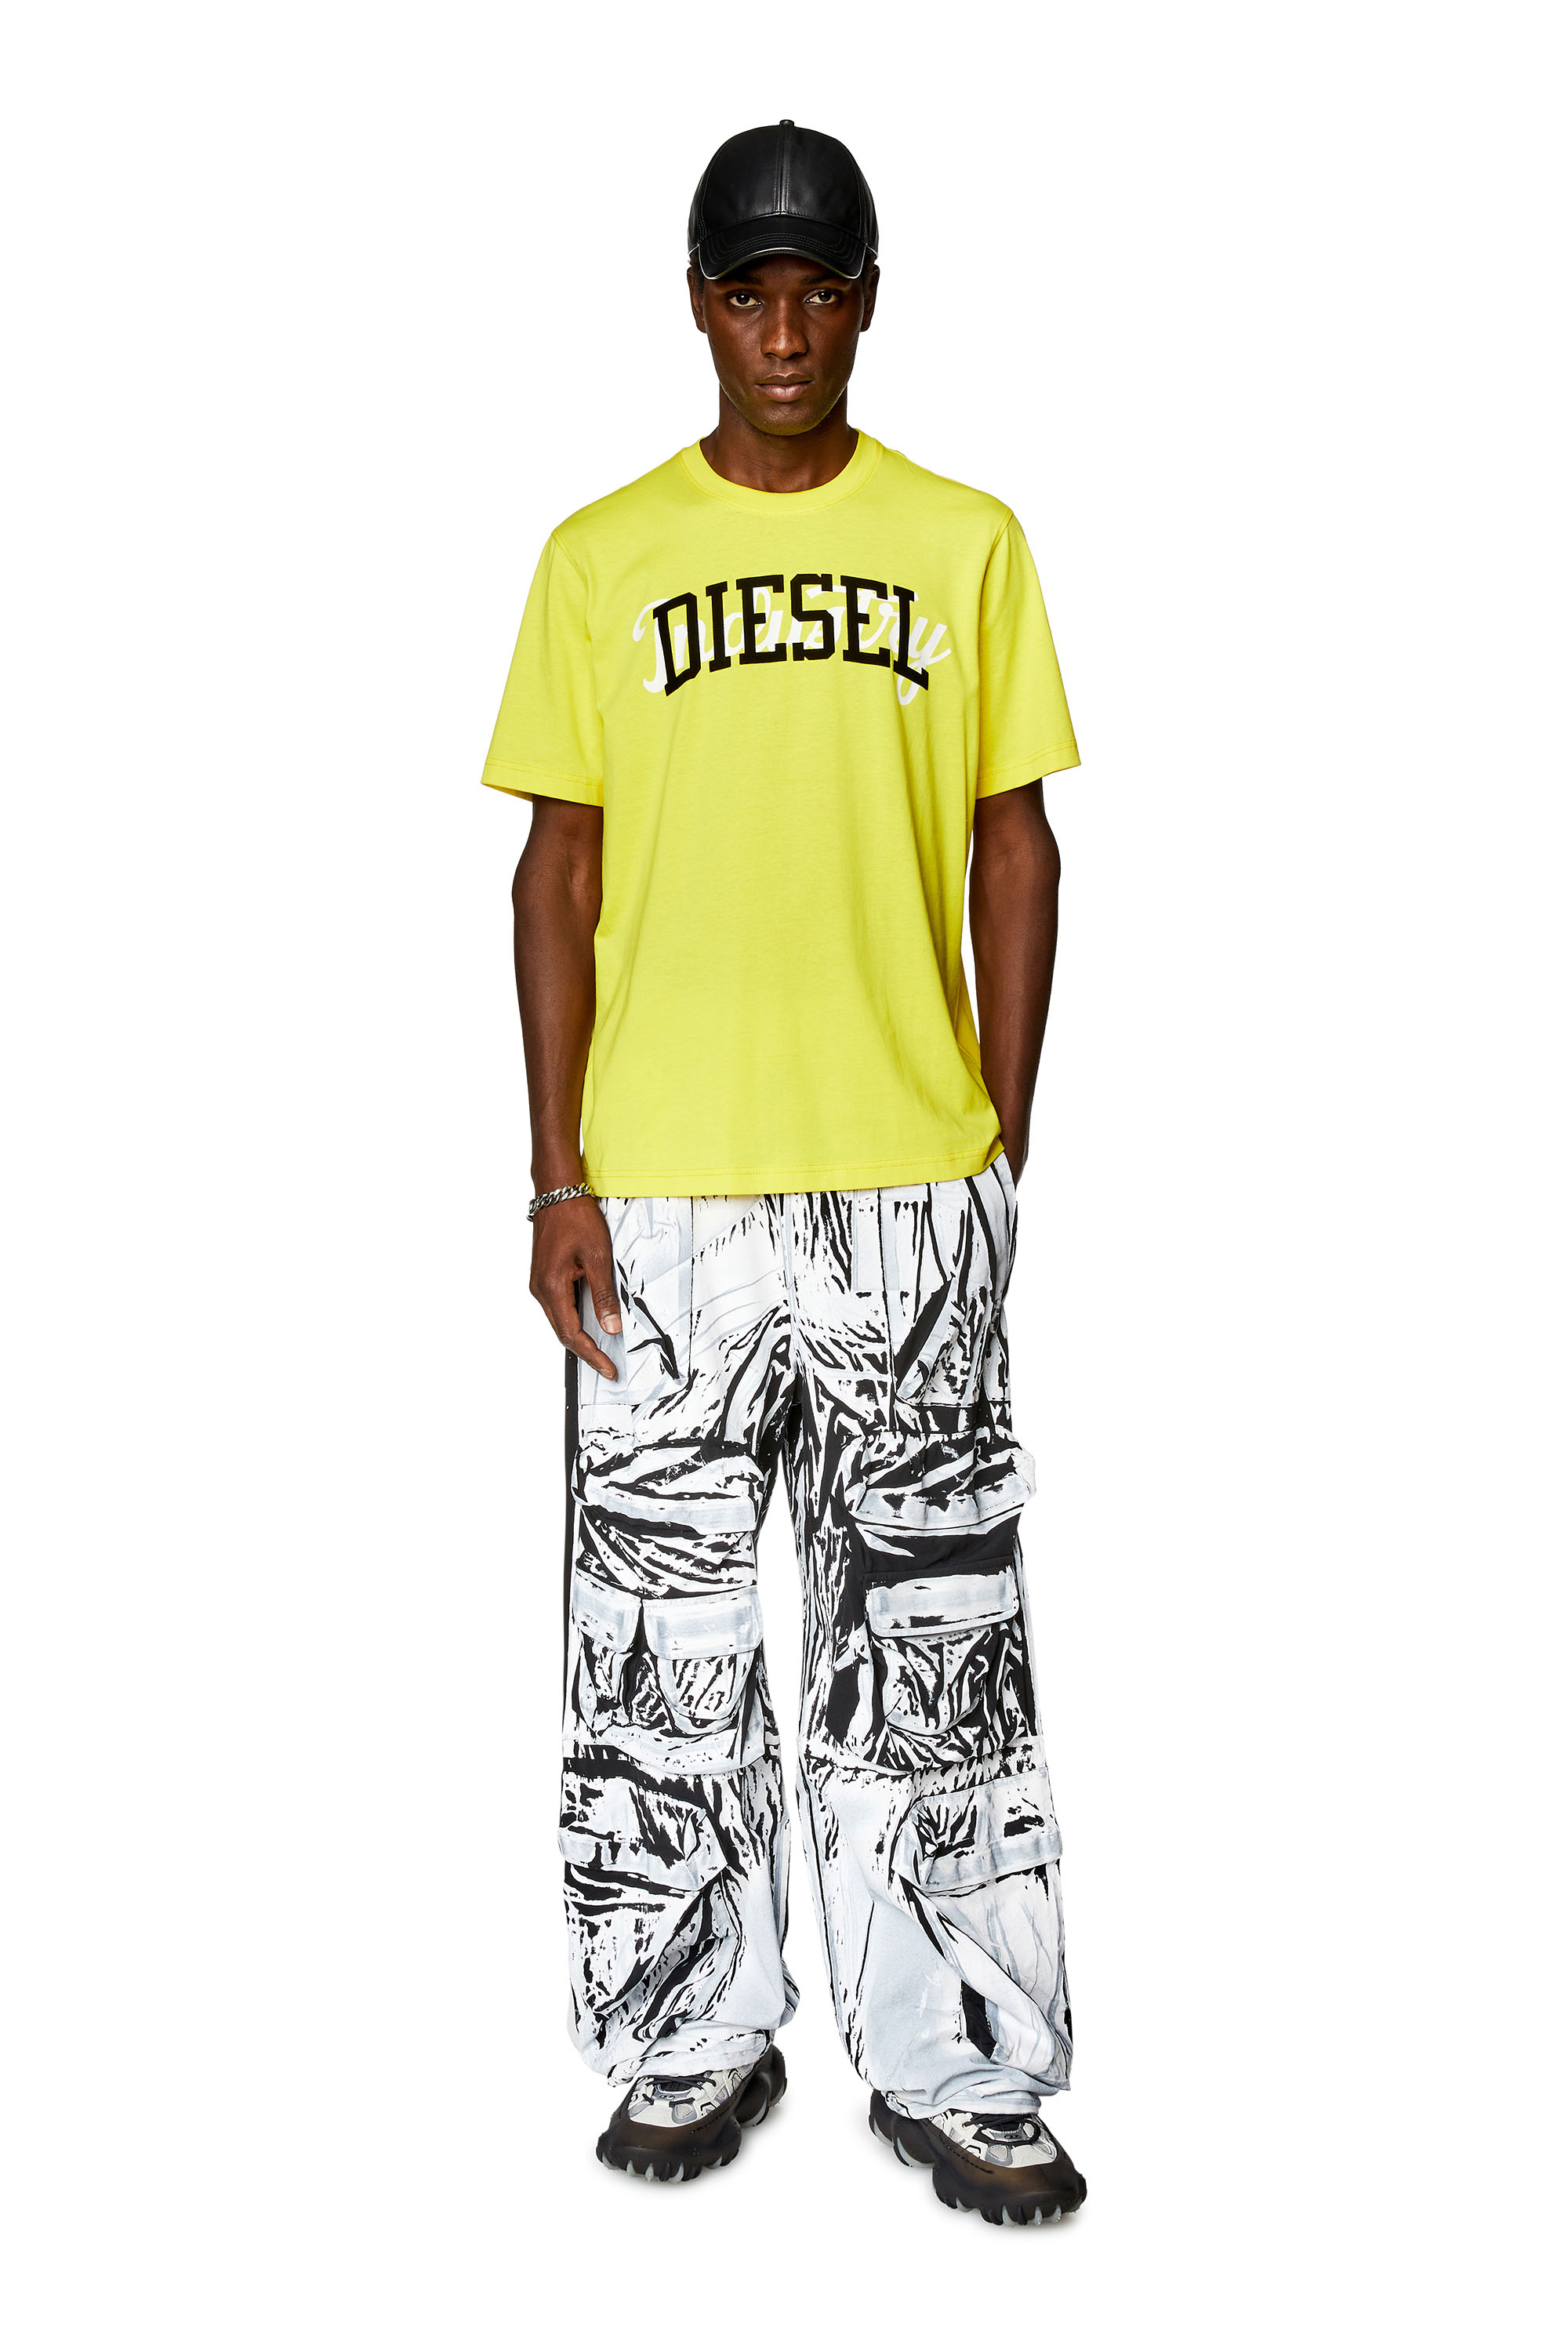 Diesel - T-JUST-N10, Man T-shirt with contrasting Diesel prints in Yellow - Image 2